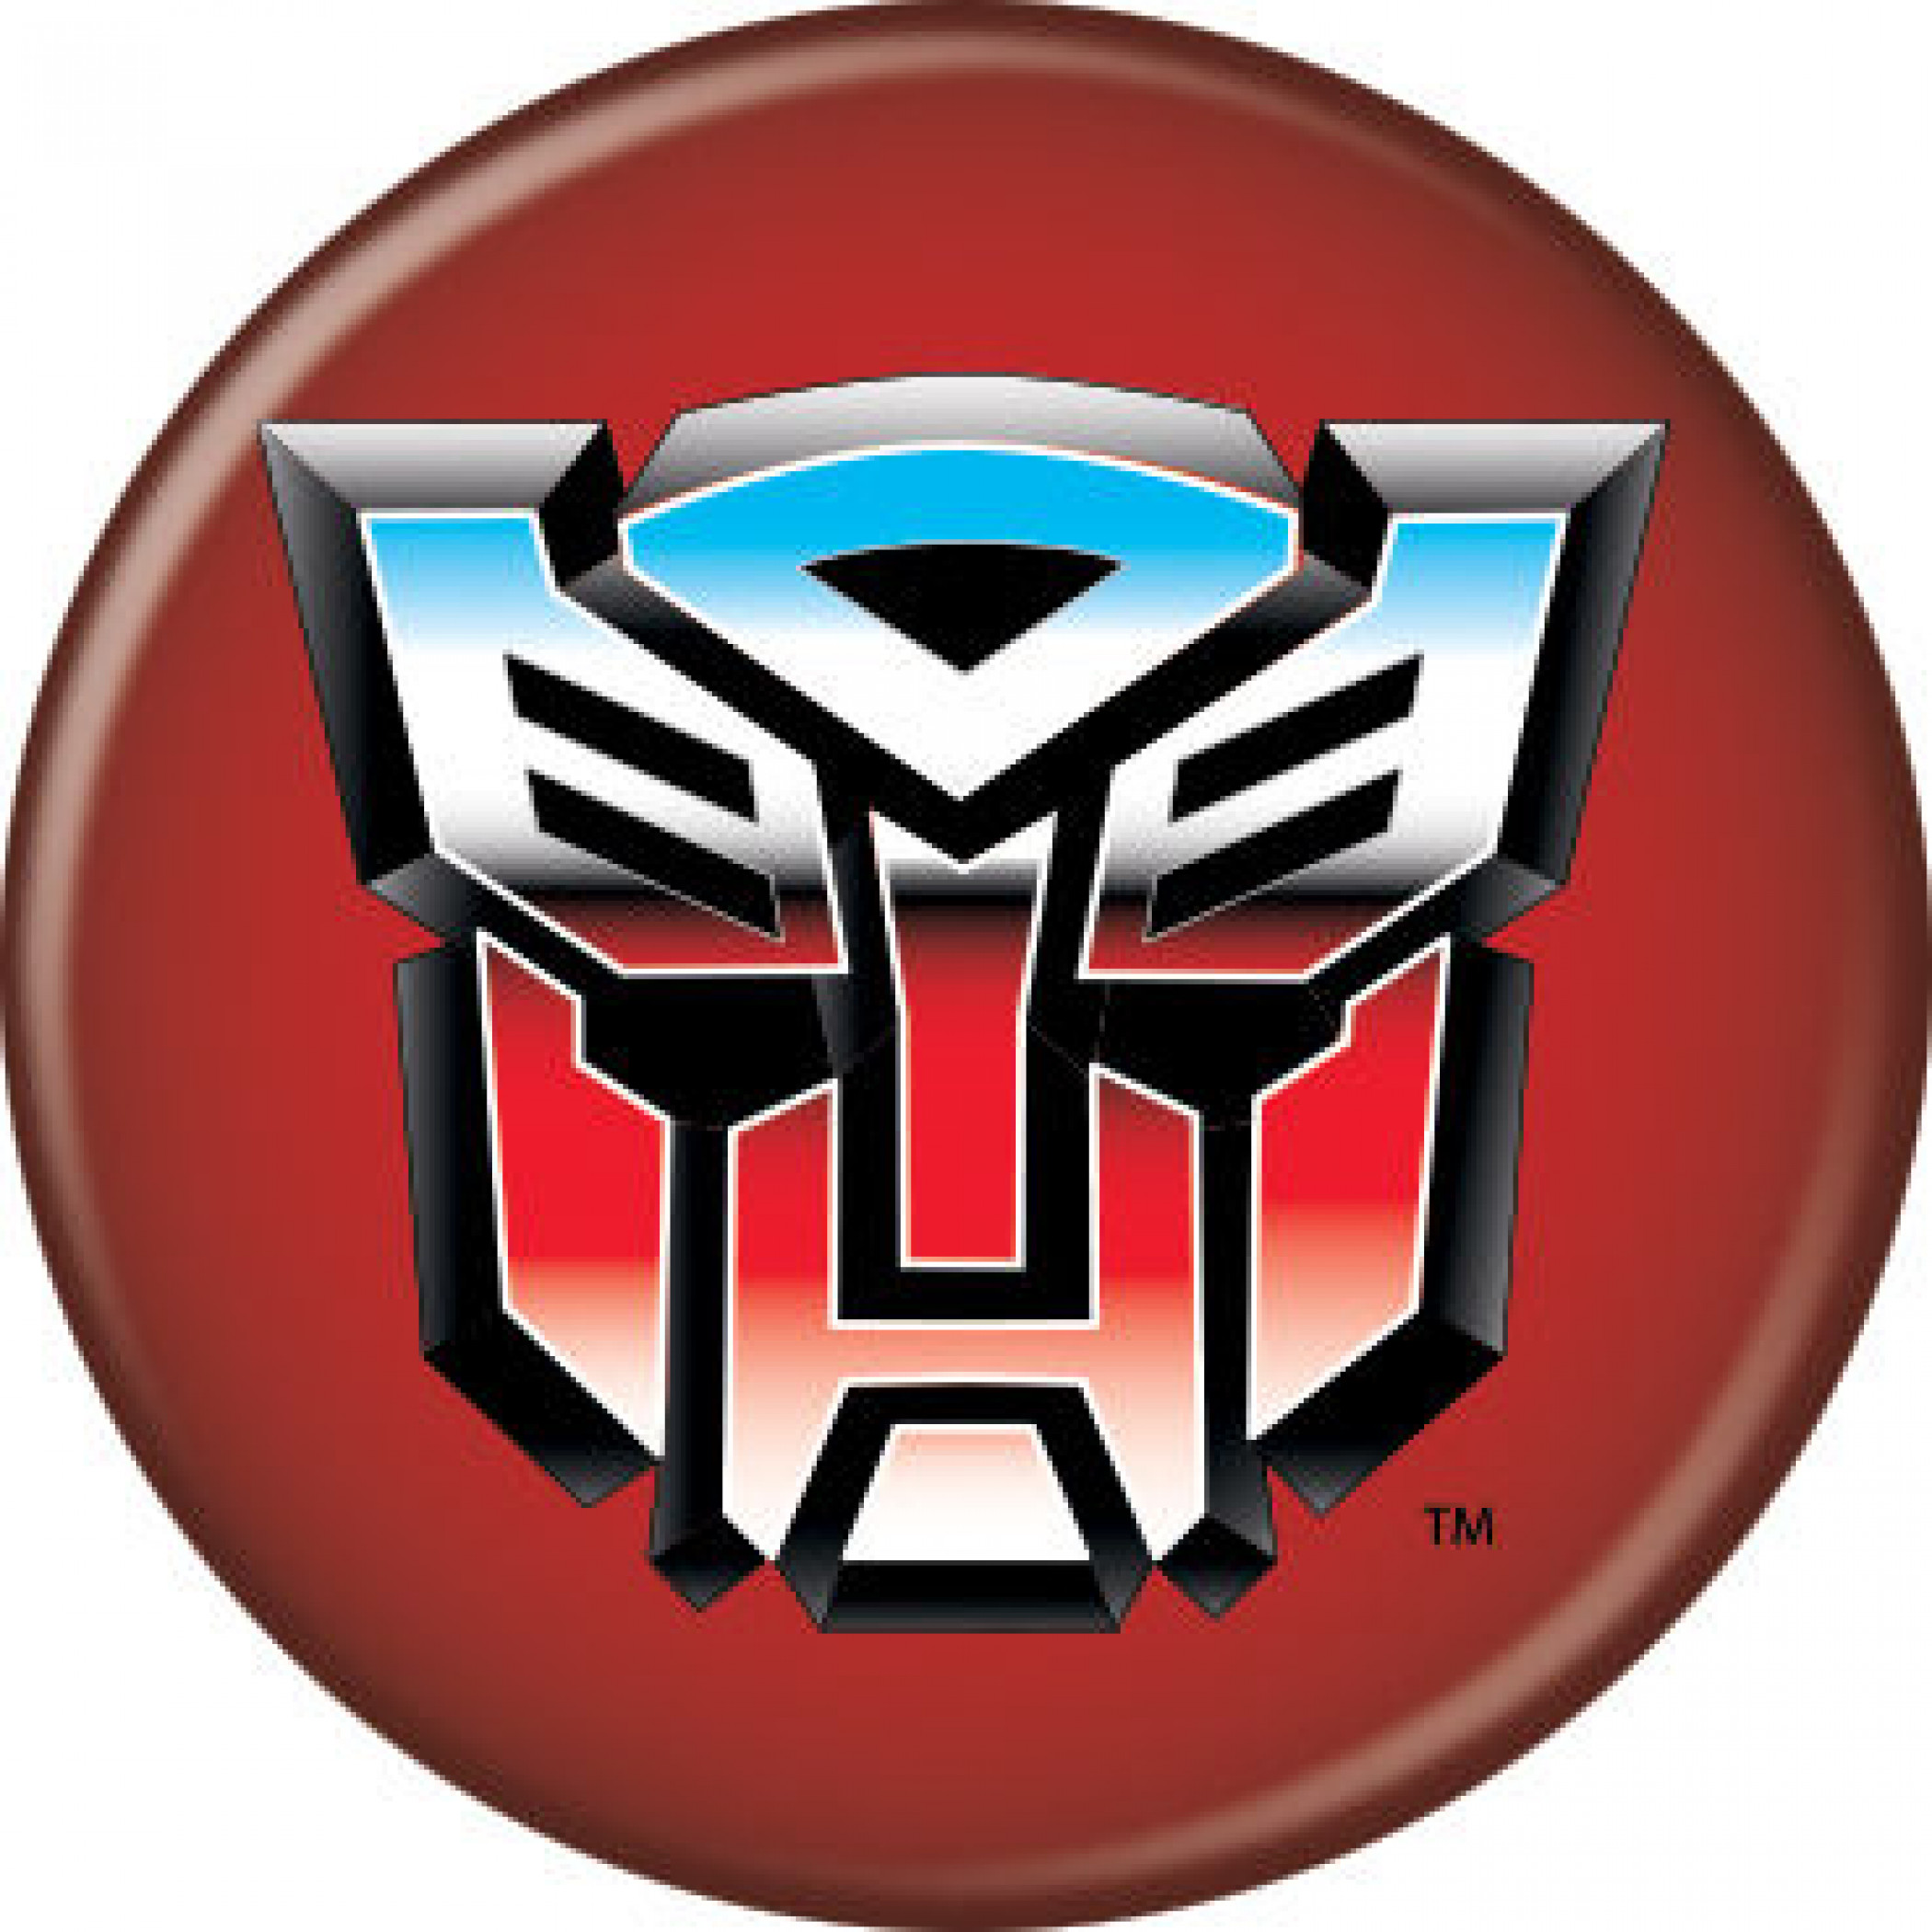 The Transformers Autobots Logo Button